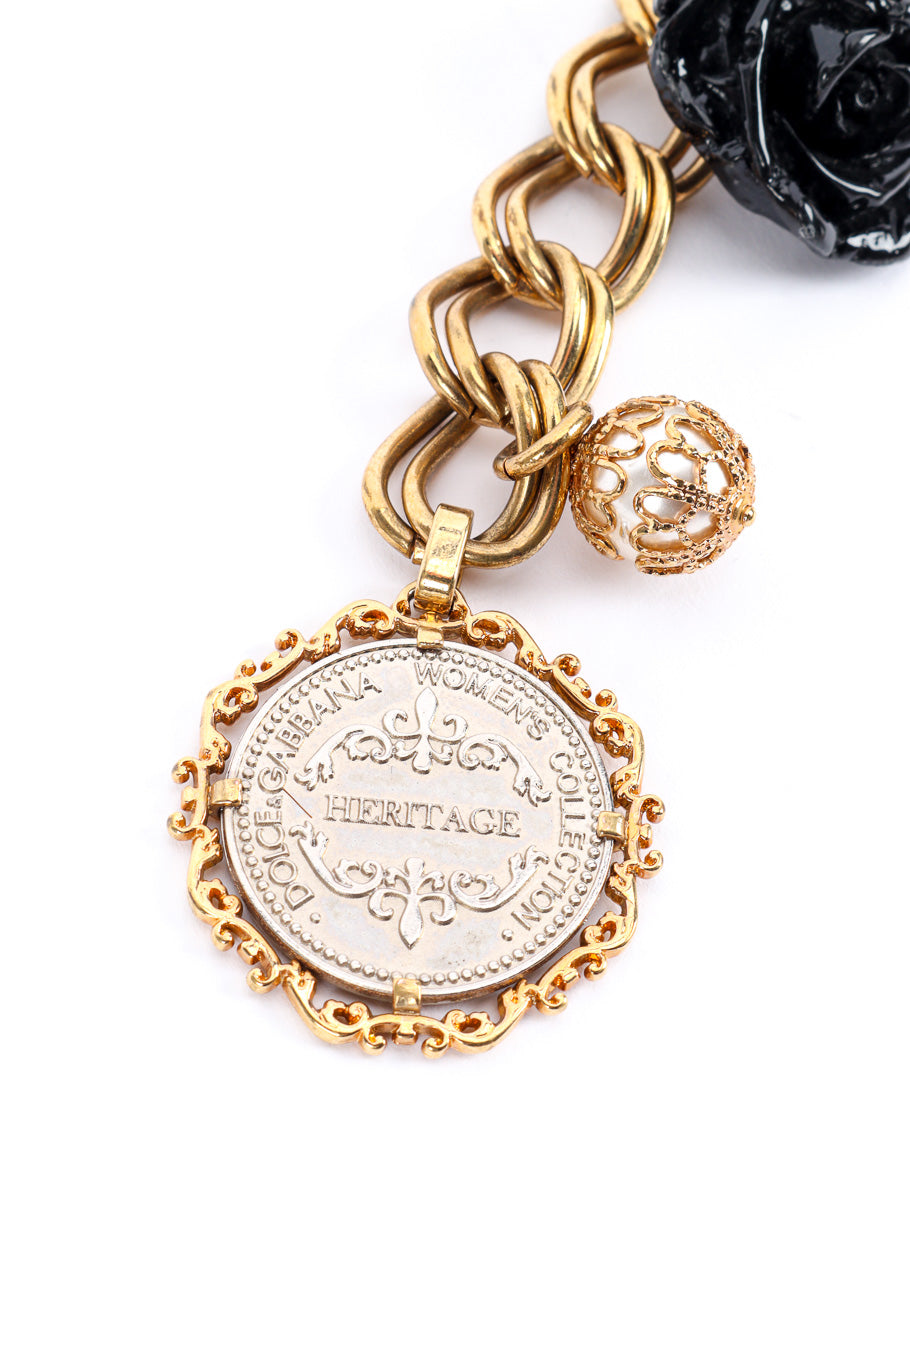 Dolce & Gabbana black rose chain belt medallion details @recessla